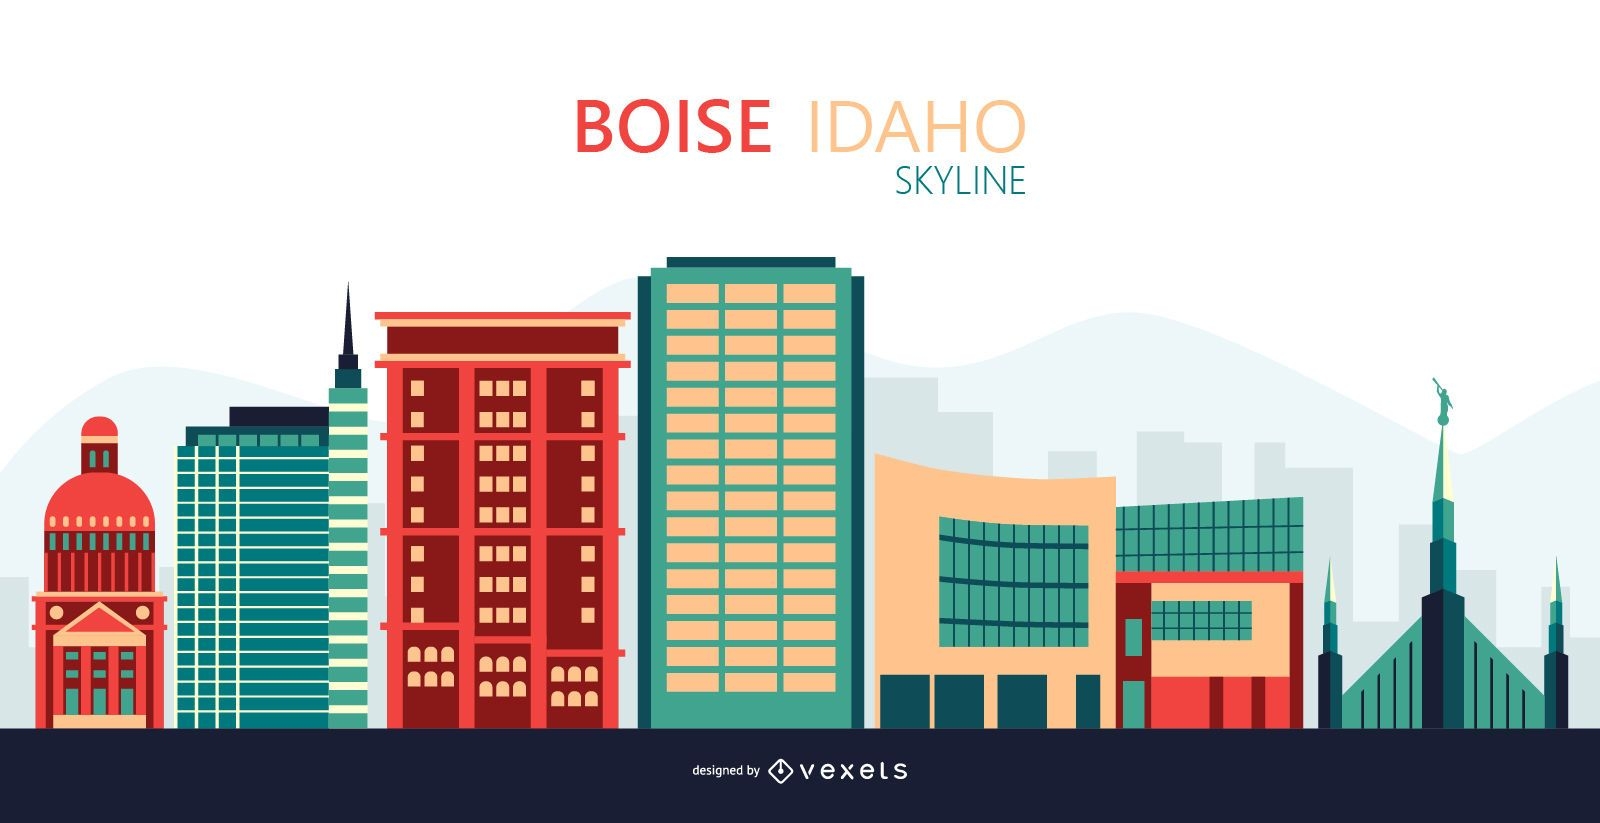 Boise skyline illustration